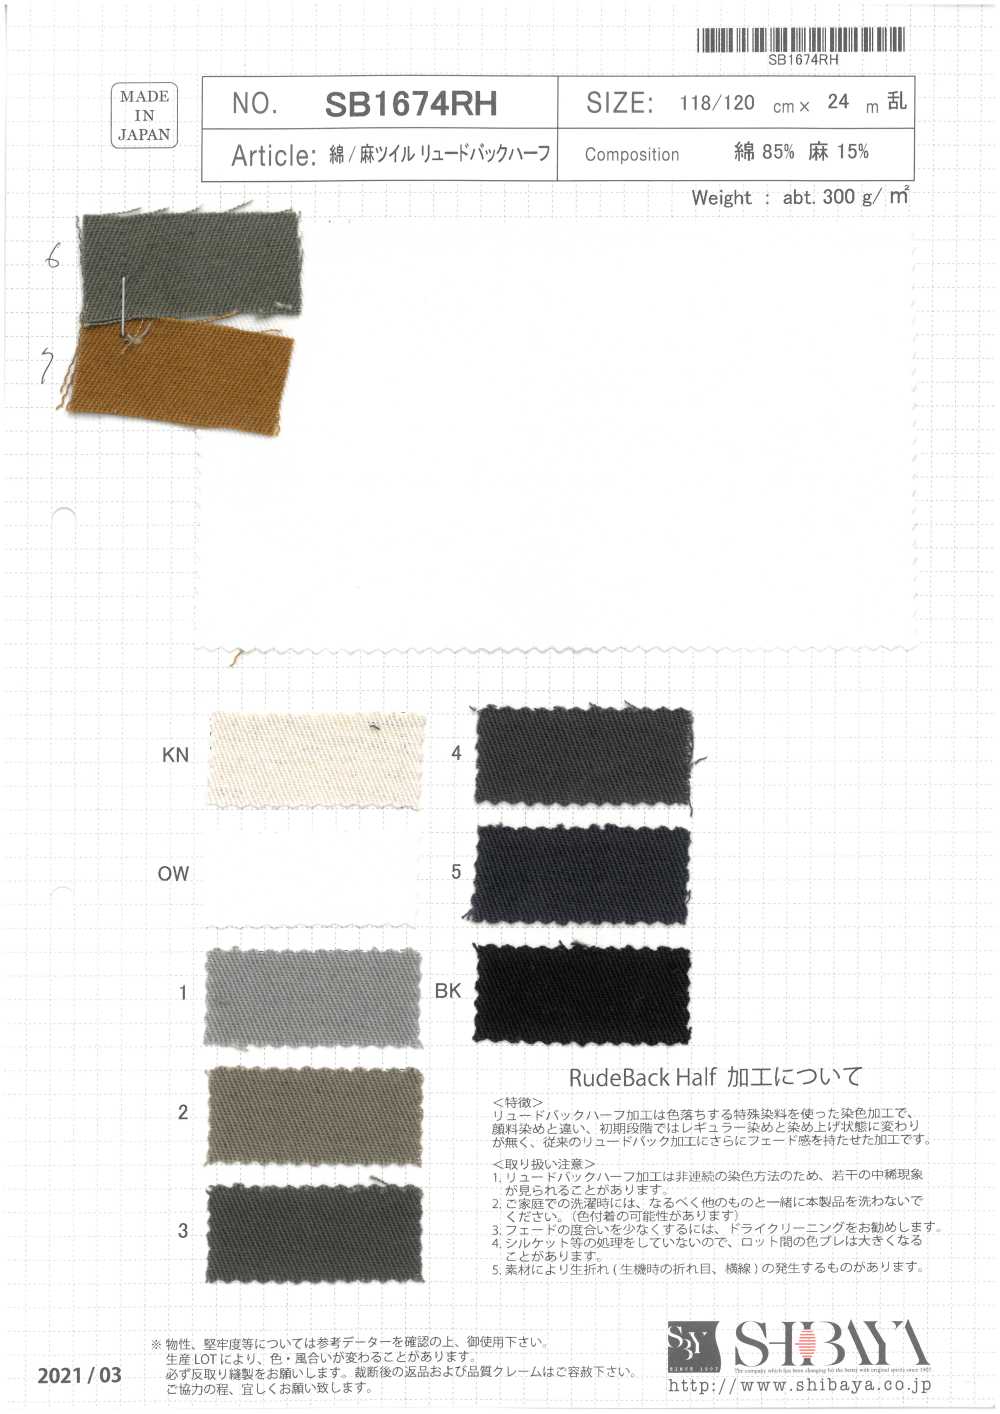 SB1674RH Cotton/ Linen Twill Rude Back Half[Textile / Fabric] SHIBAYA